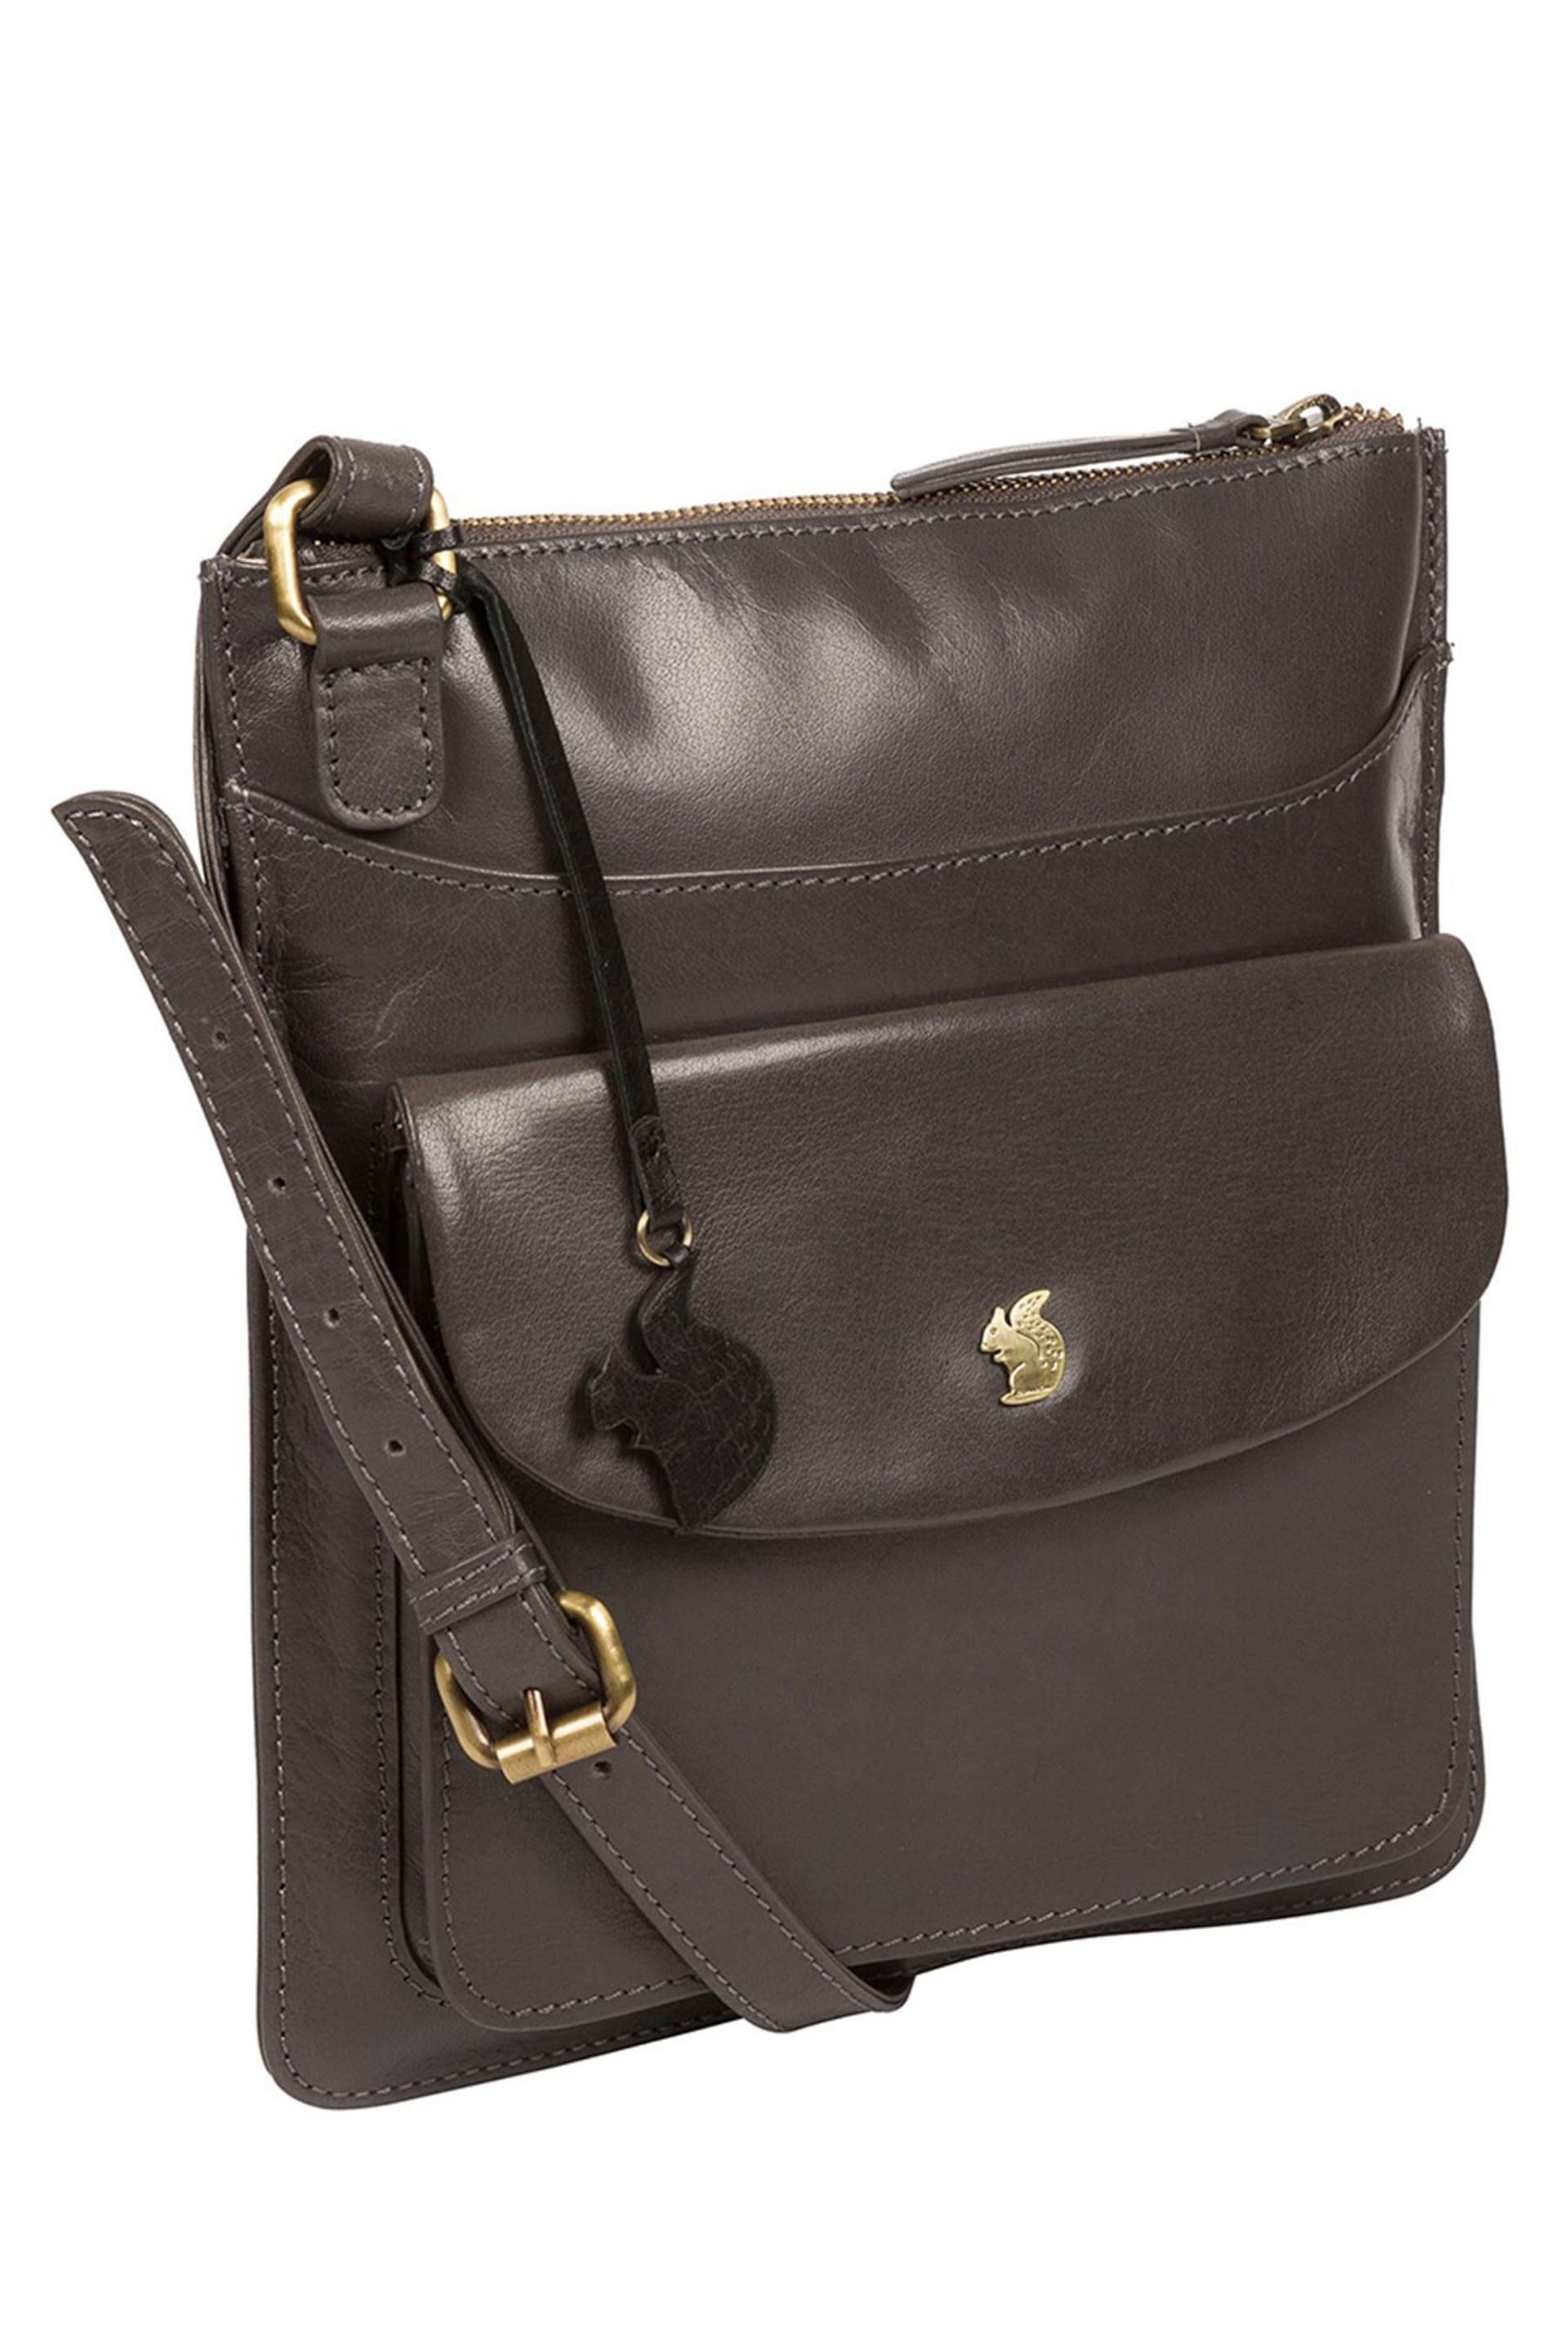 Conkca Lauryn Leather Cross-Body Bag - Image 5 of 7